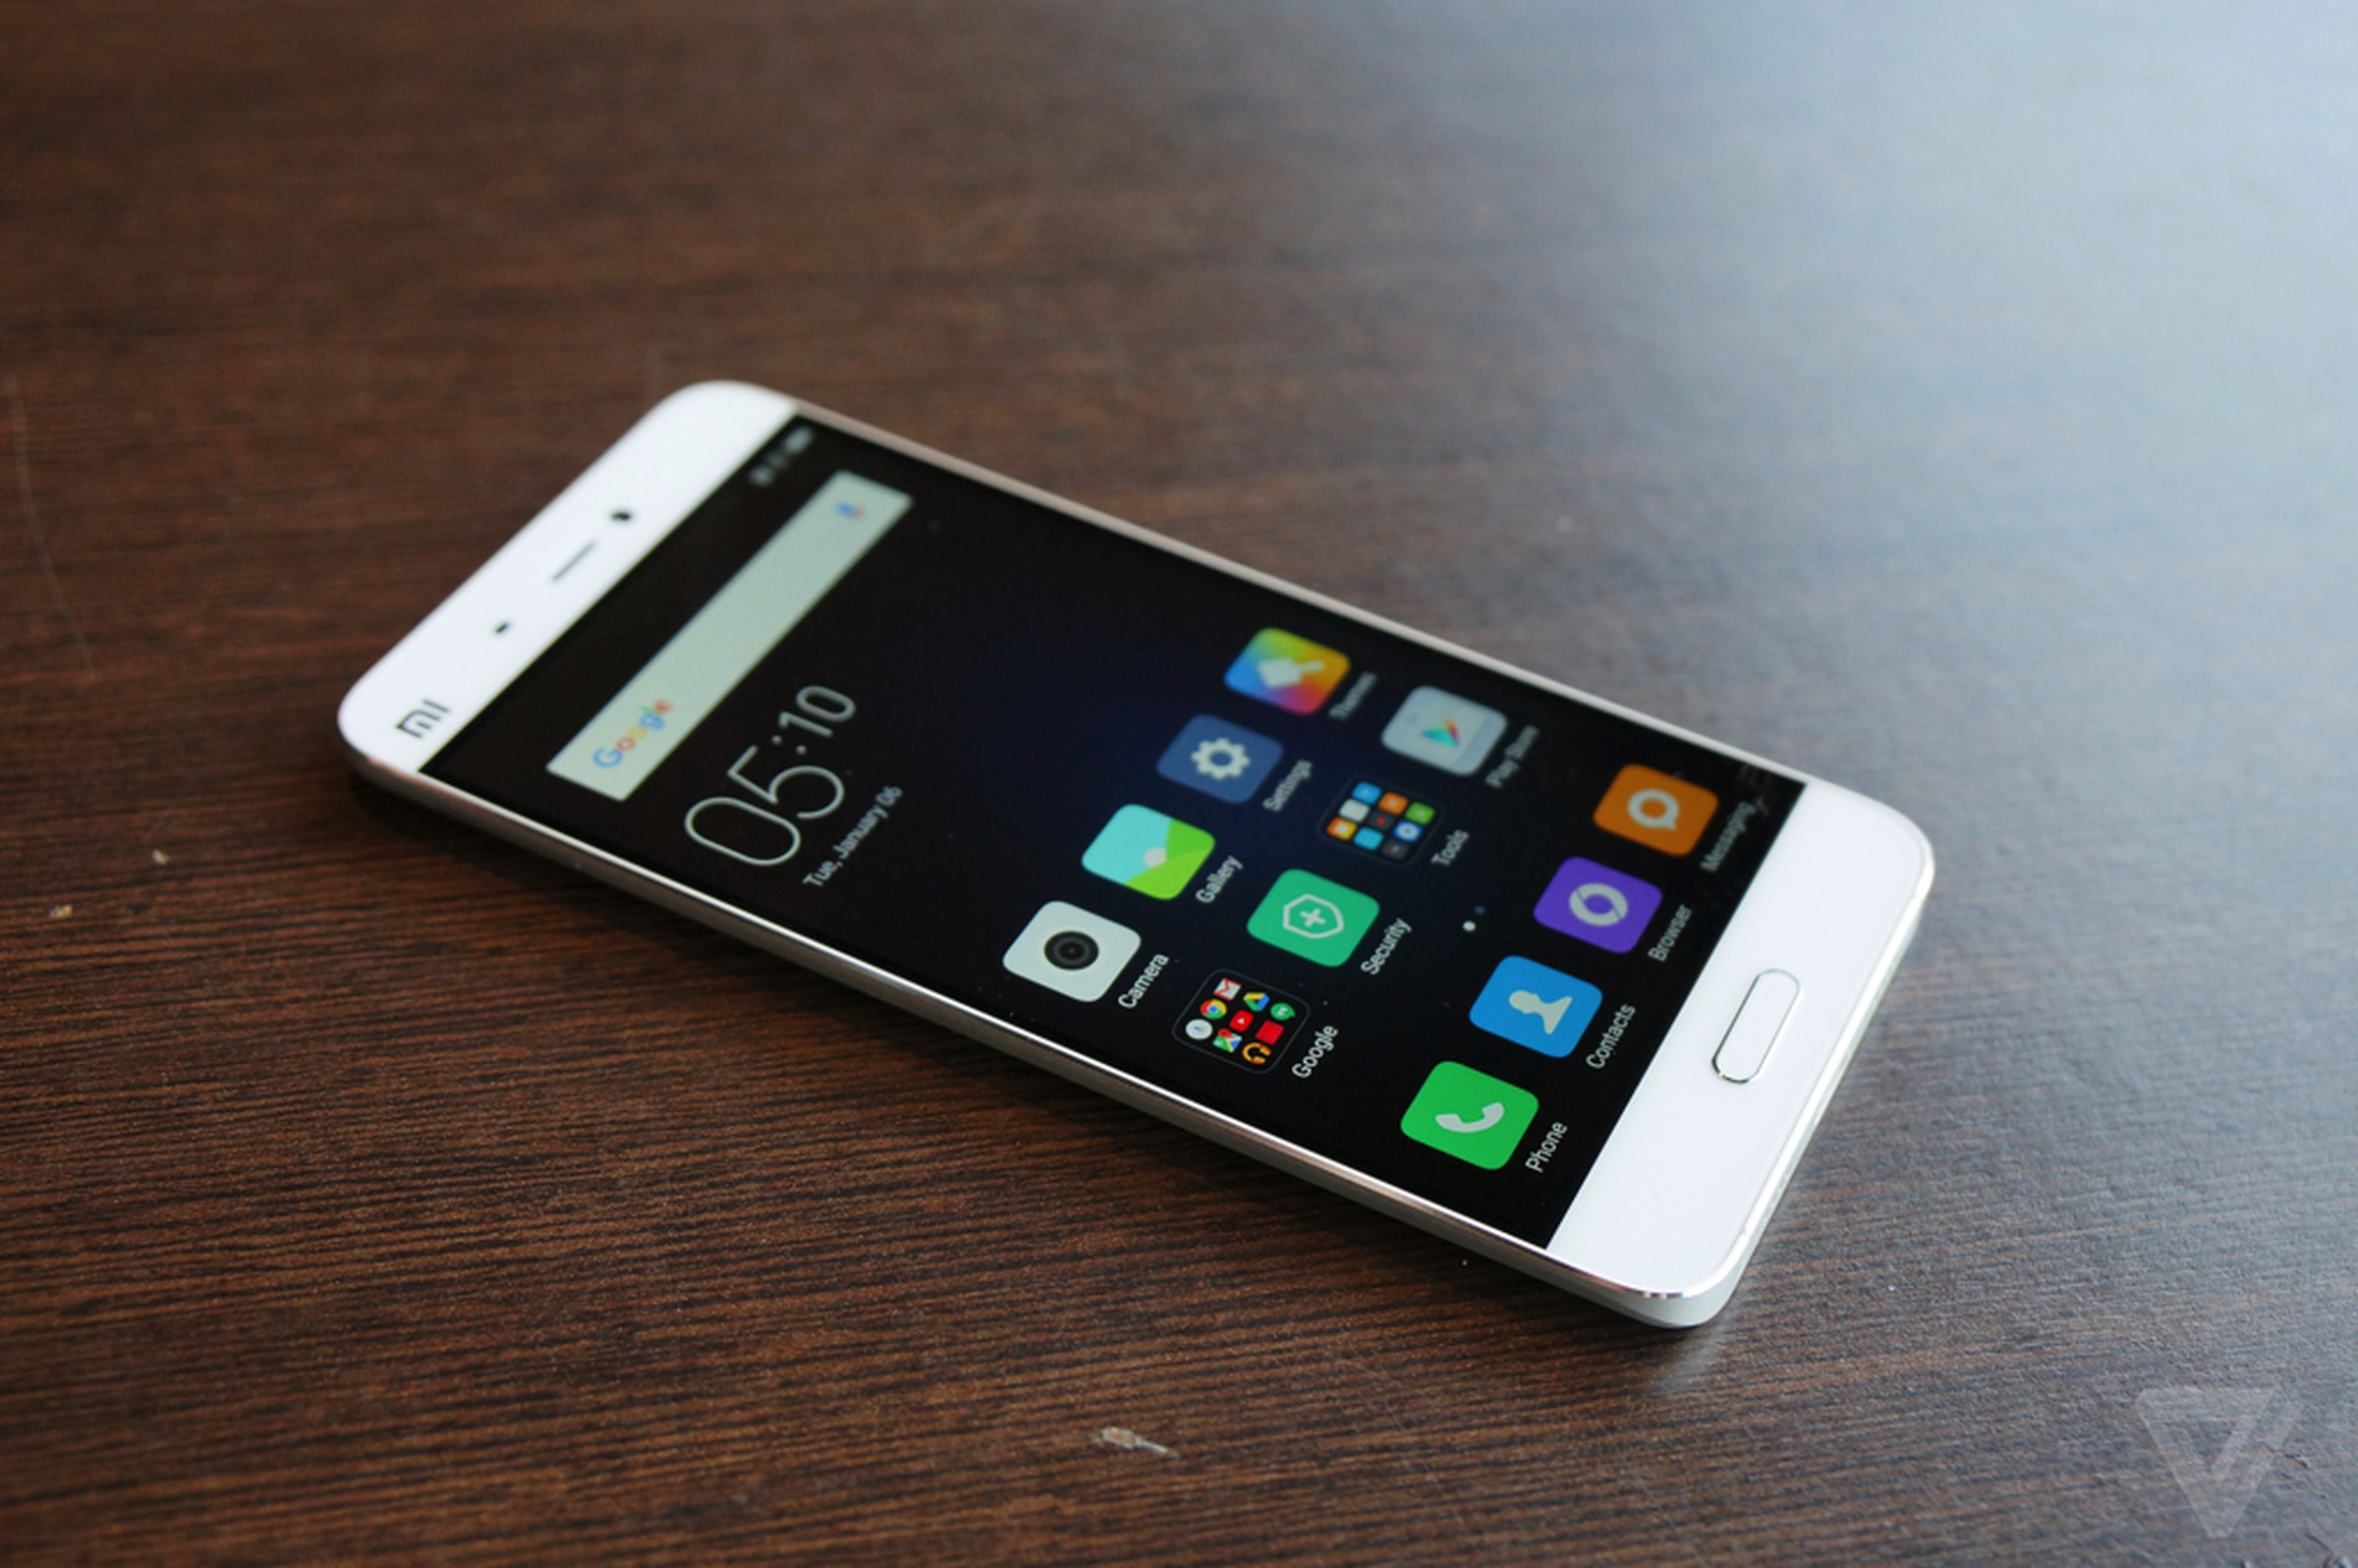 Xiaomi Mi5 hands-on photos